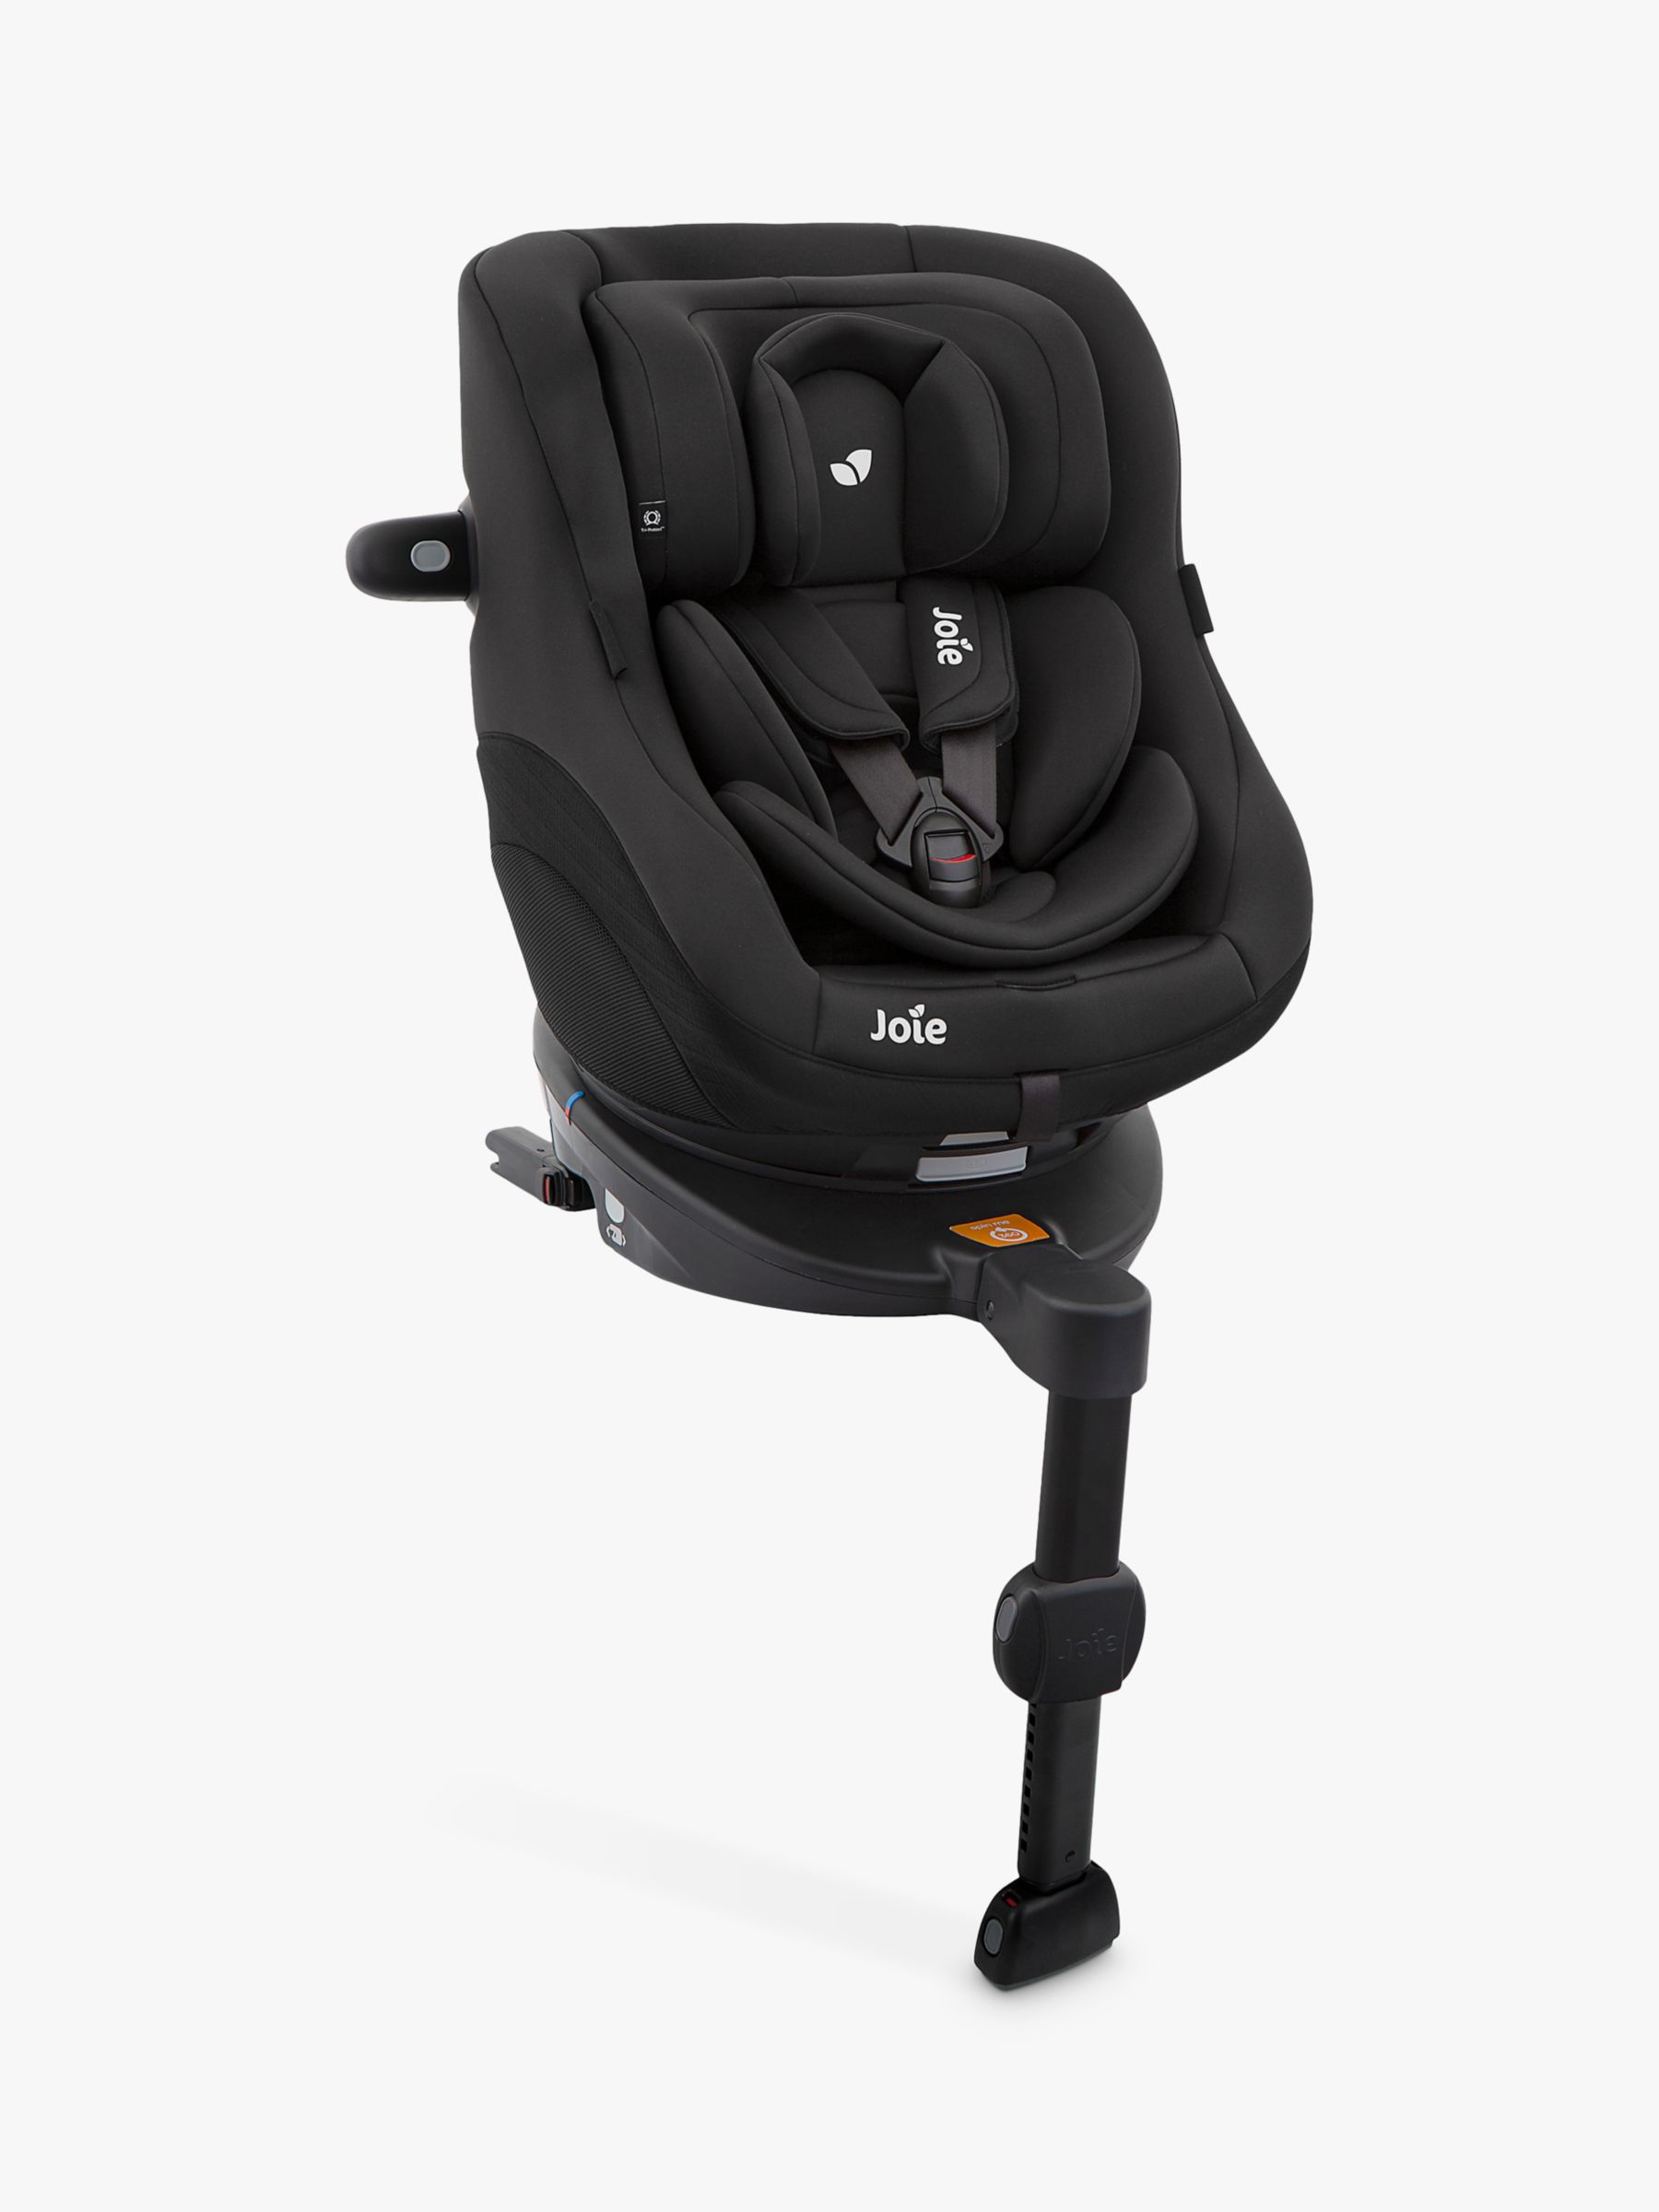 XC90 i-Size/ISOFIX mounting points for child seats